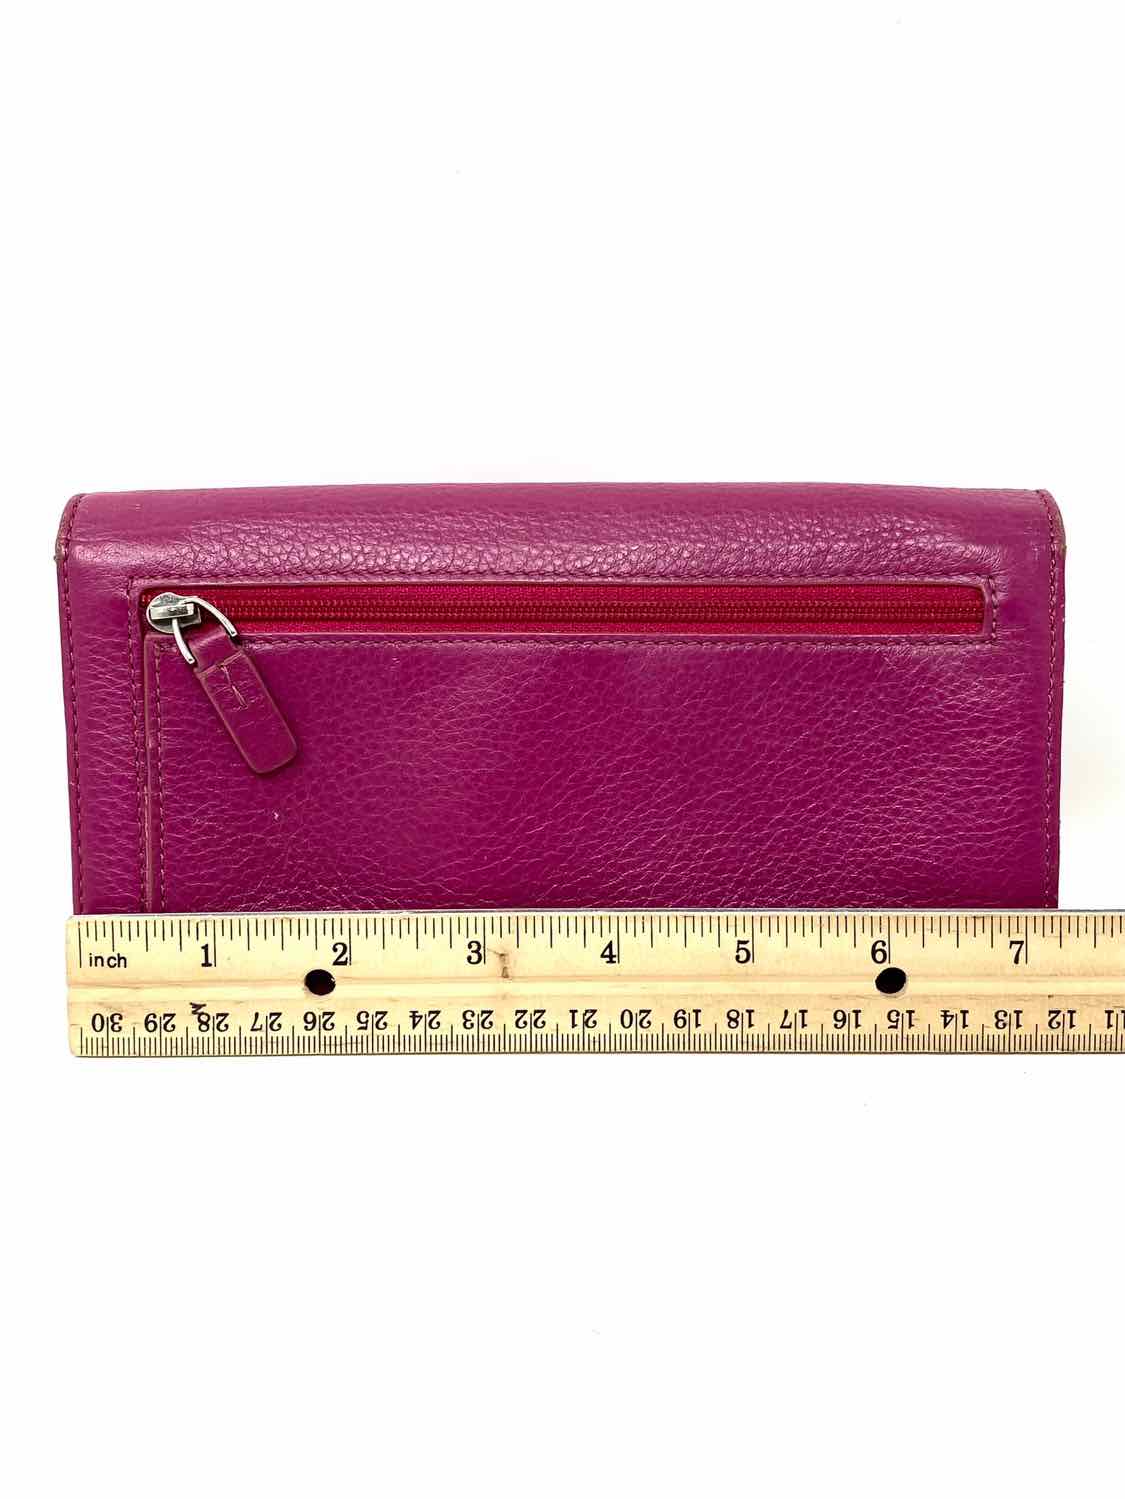 Buy Zarapack Women's Hologram Zipper Around Pu Leather Wallet Clutch Purse ( Purple) at Amazon.in